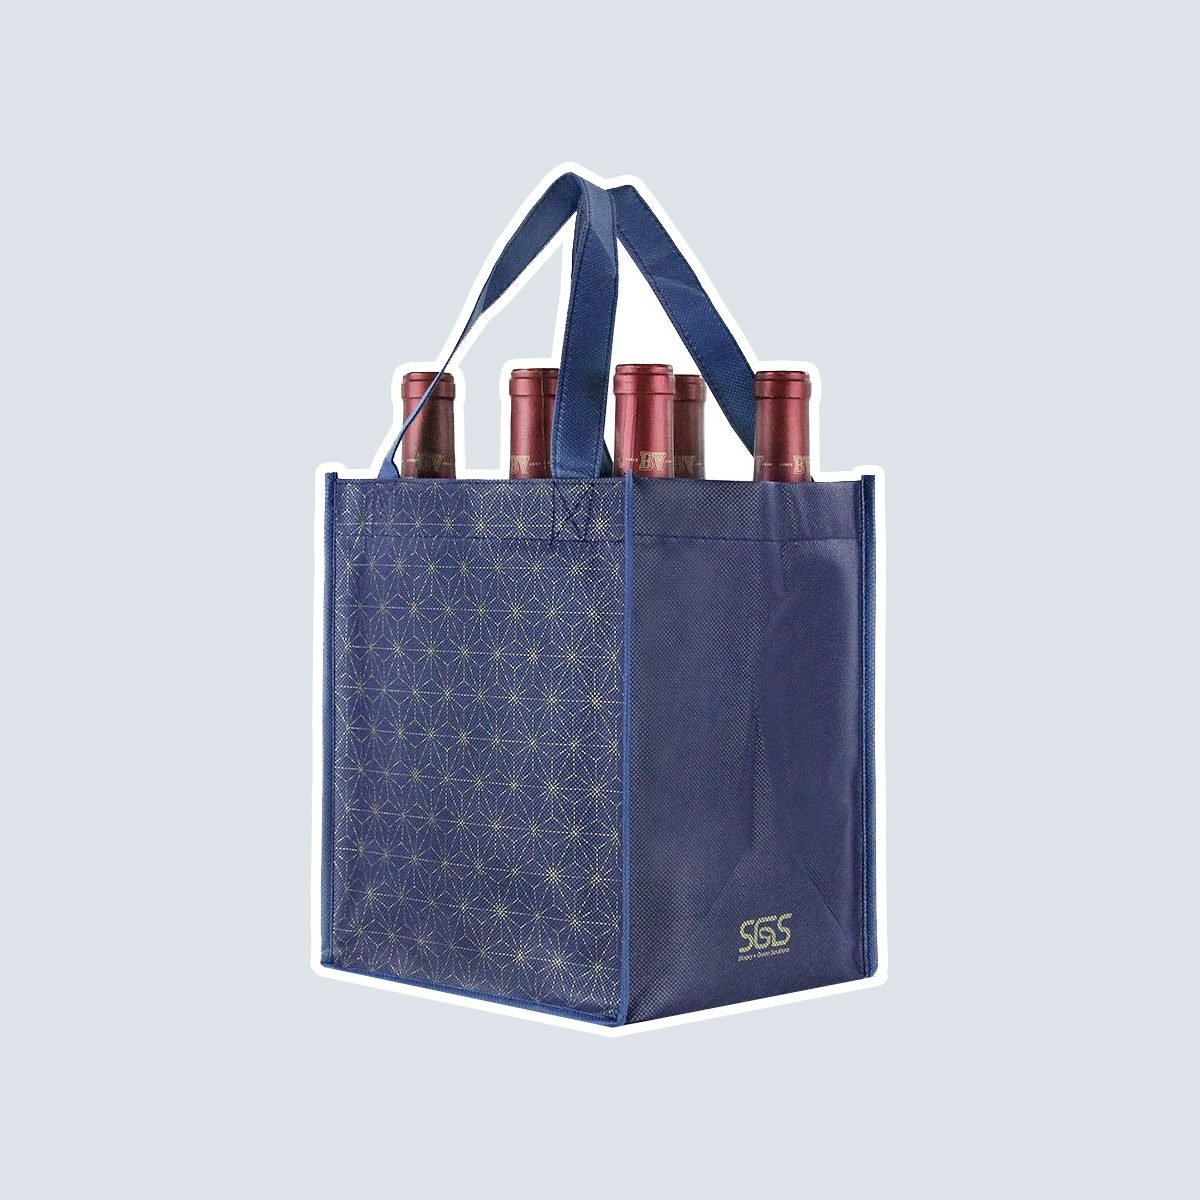 6 Bottles Bag, Branded Bags